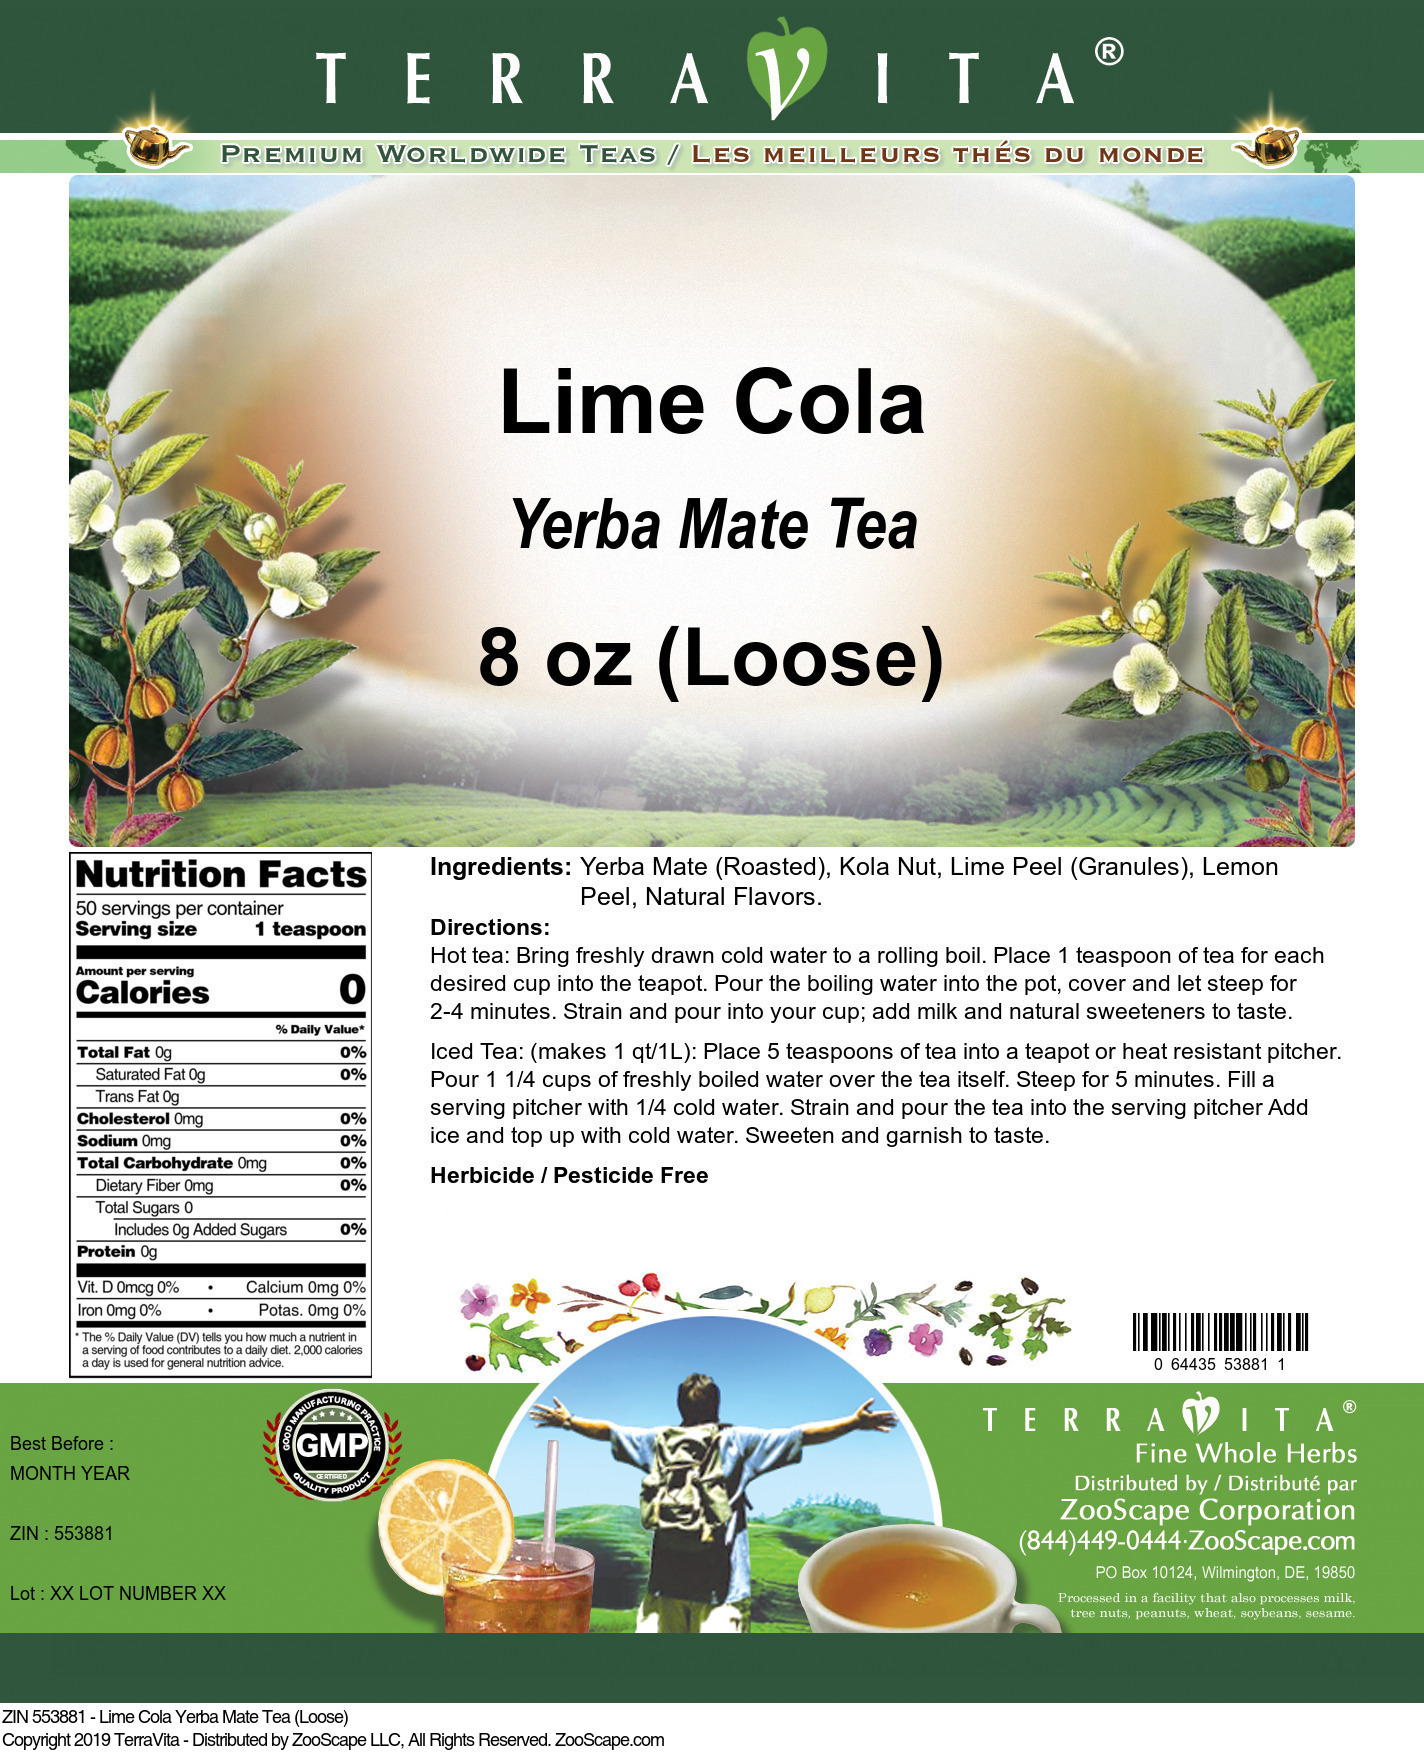 Lime Cola Yerba Mate Tea (Loose) - Label